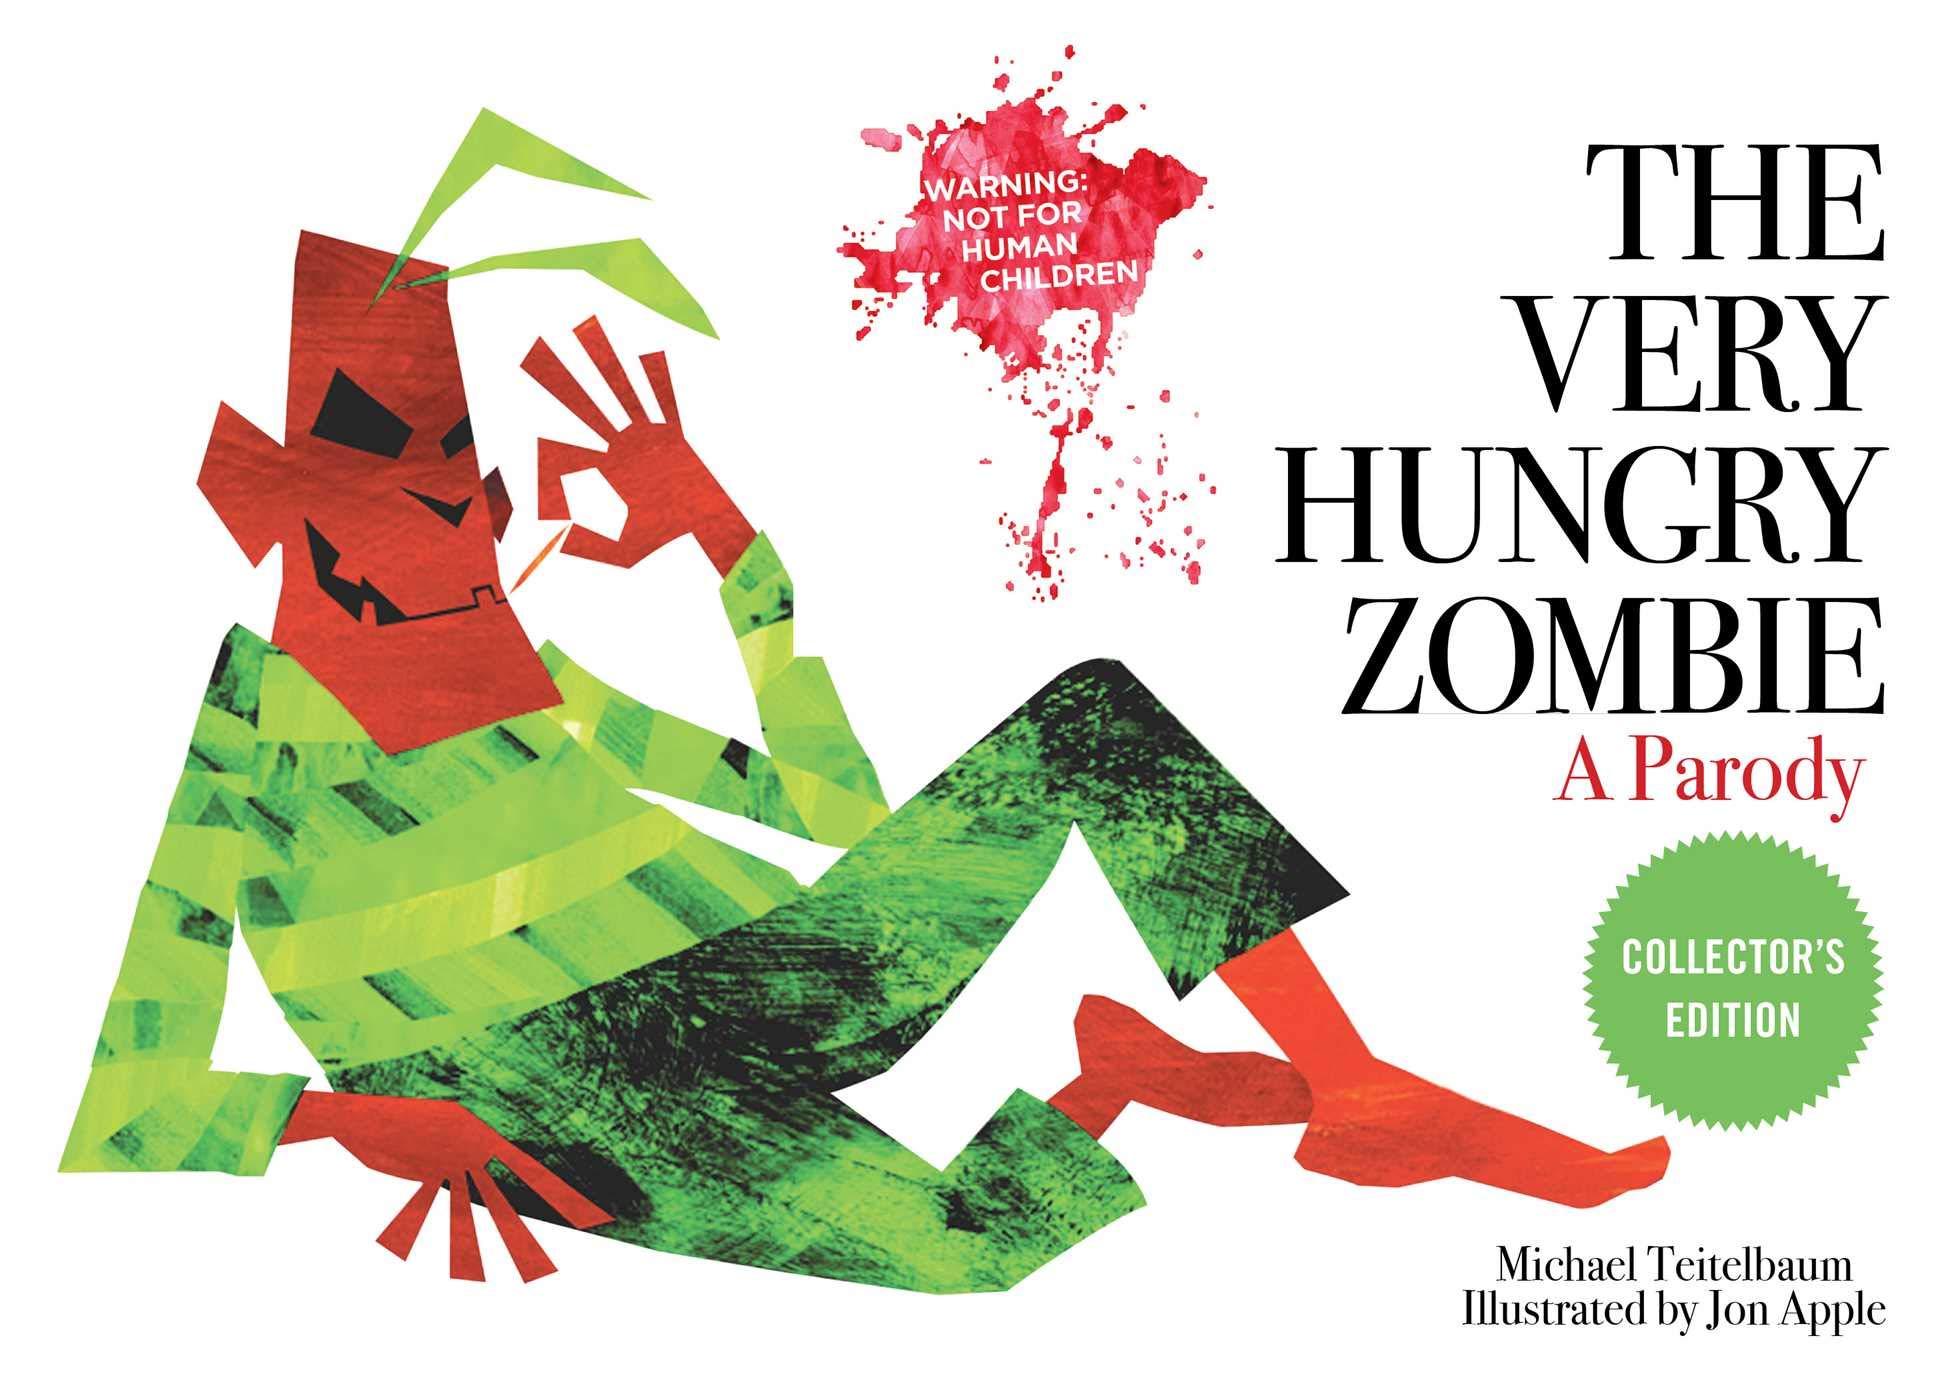 "The Very Hungry Zombie: A Parody" by Michael Teitelbaum